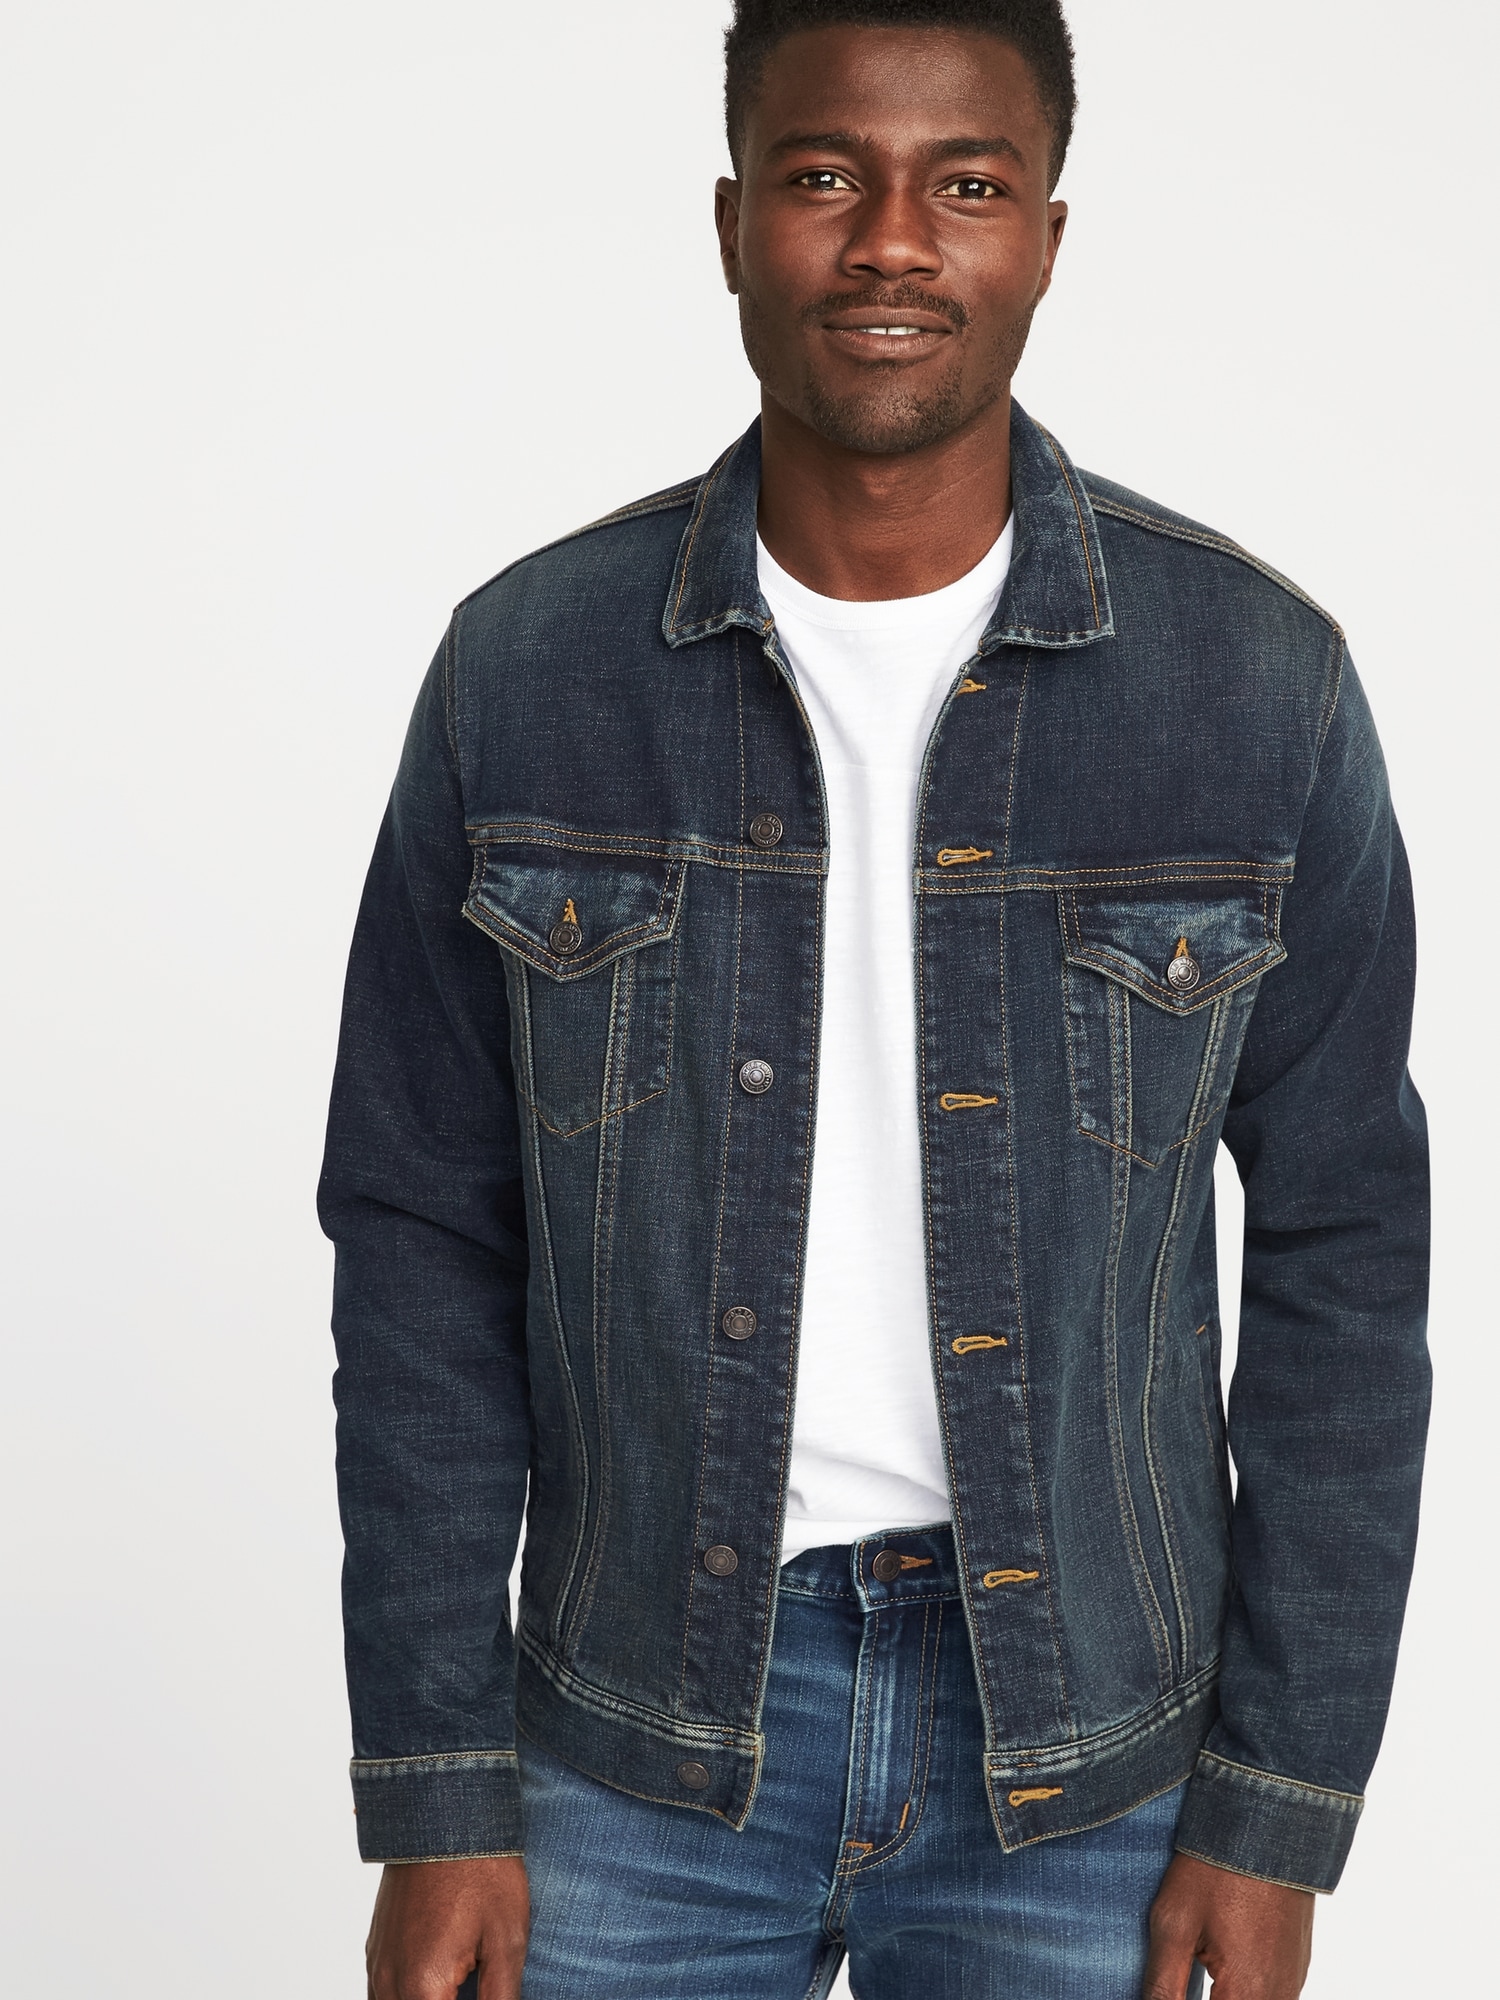 jeans jacket mens low price